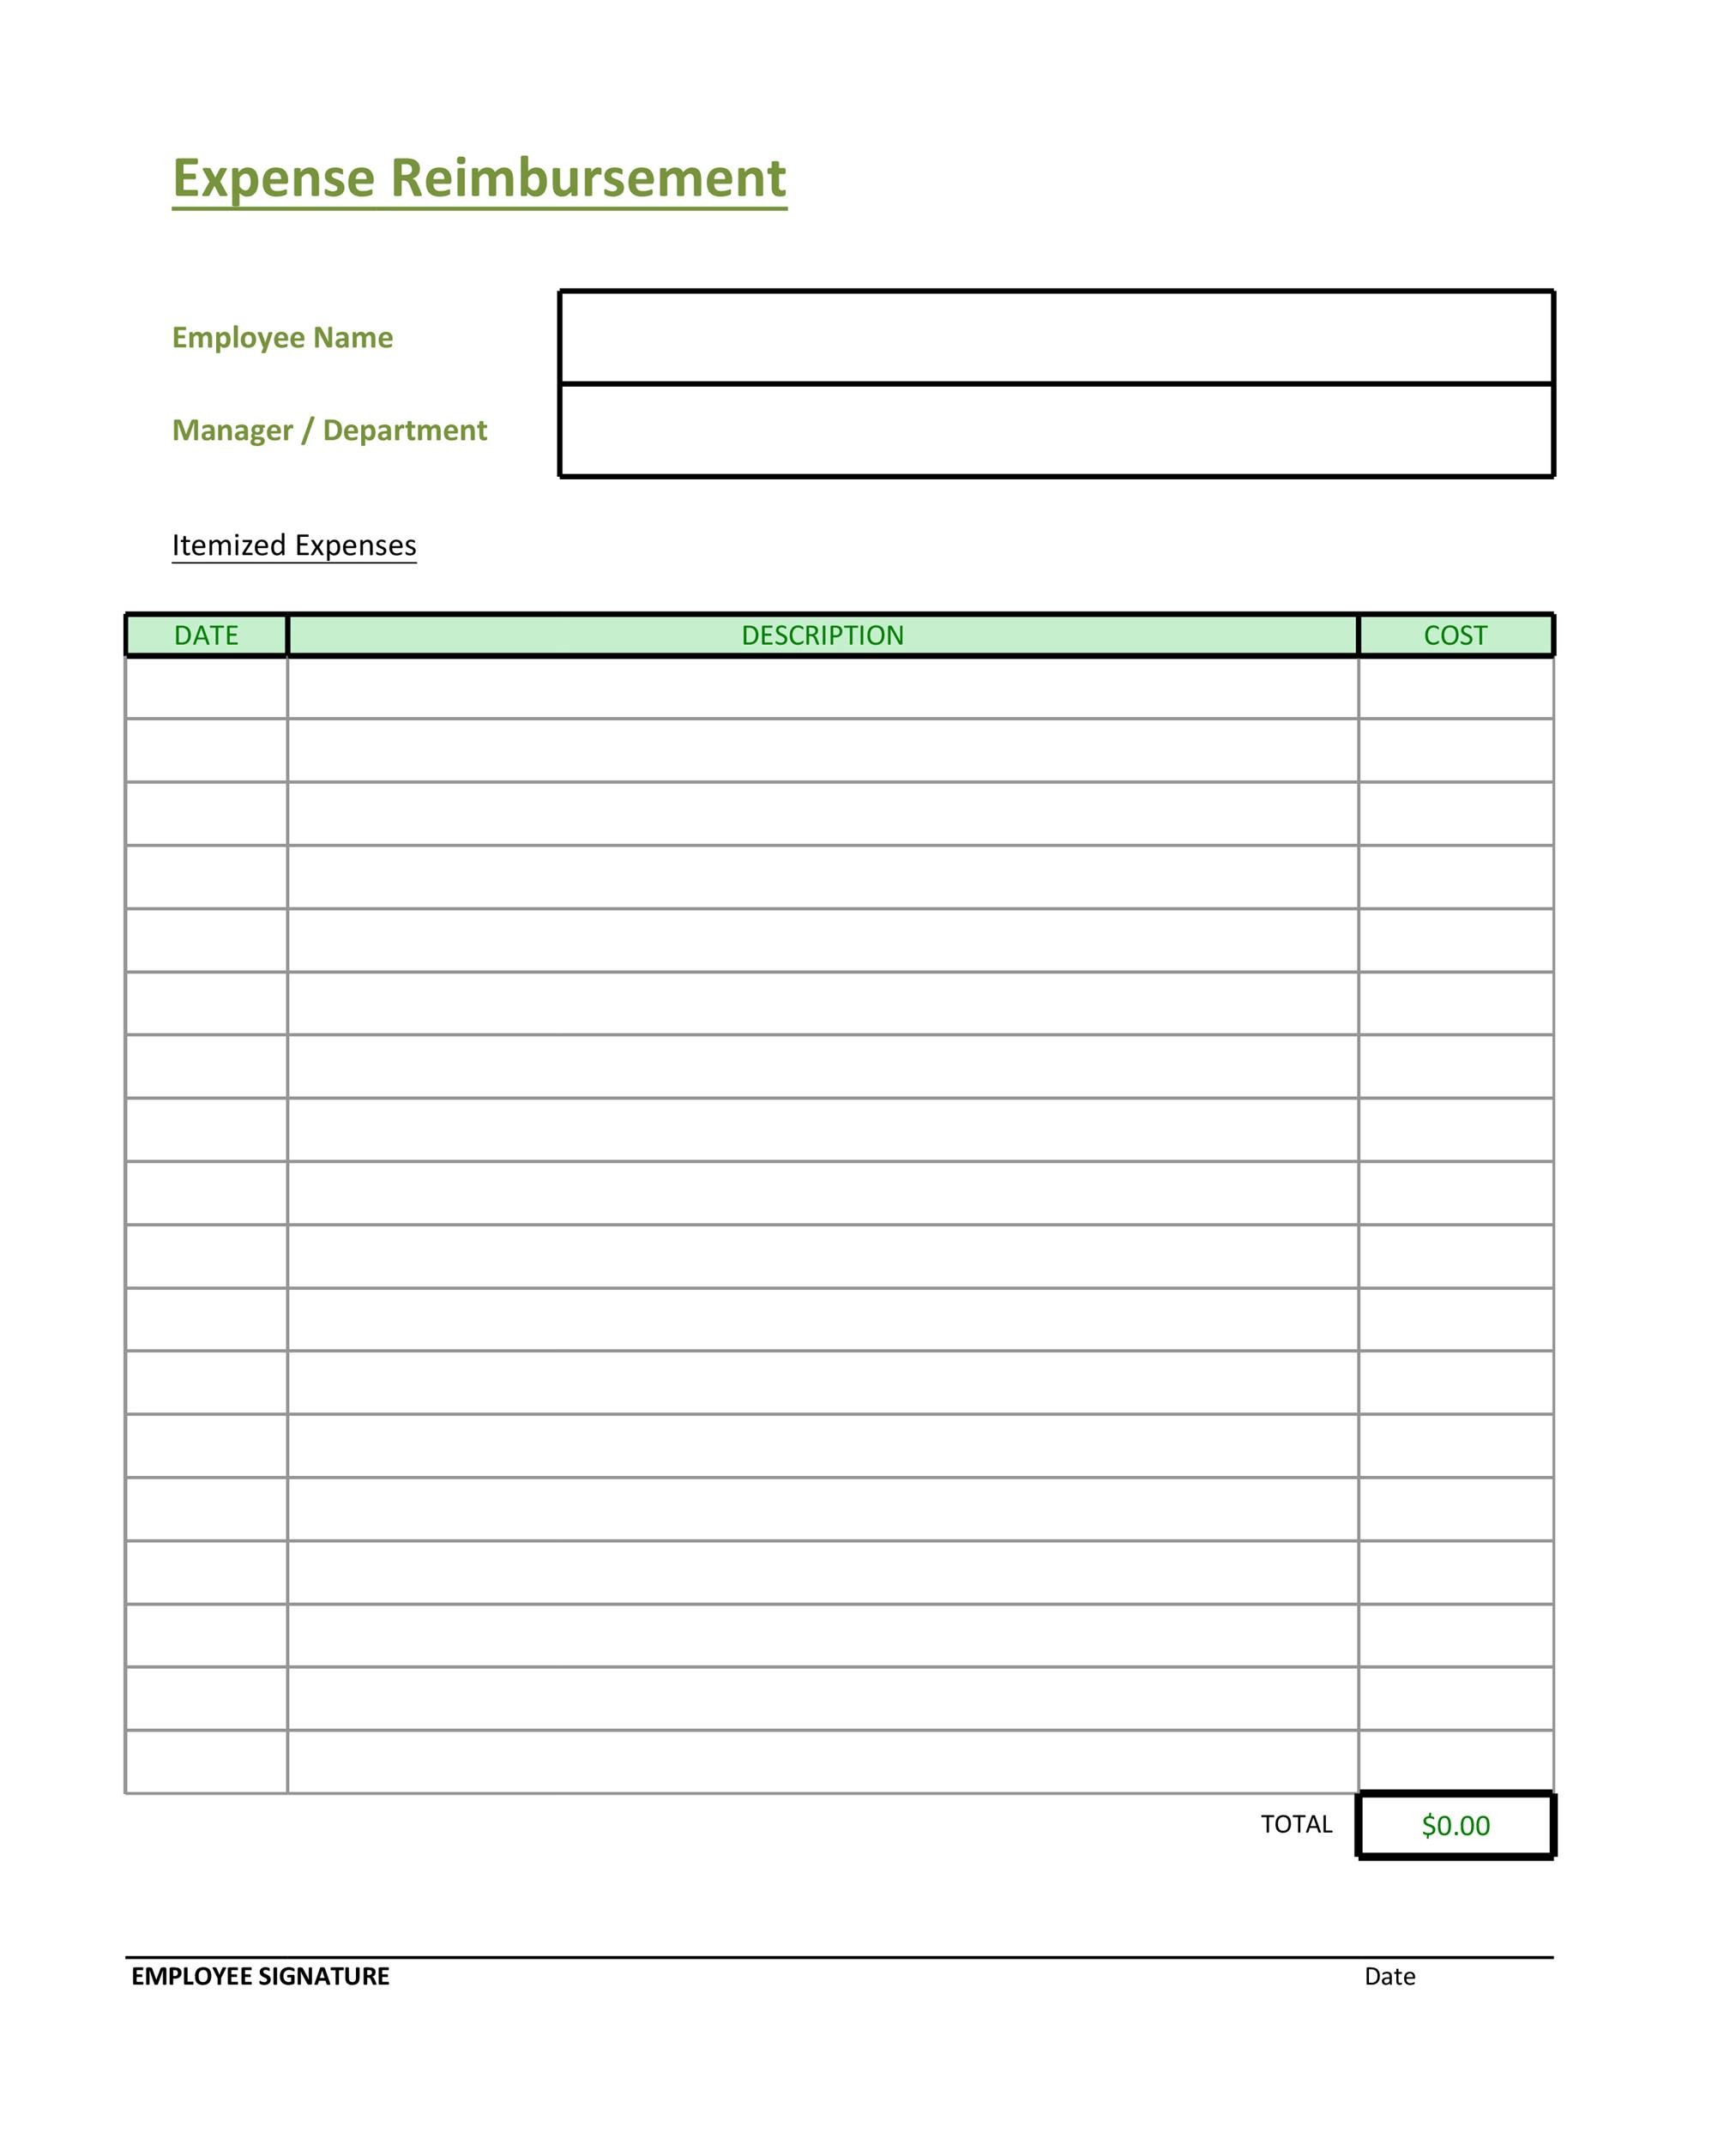 Expenses Claim Form Template from templatelab.com